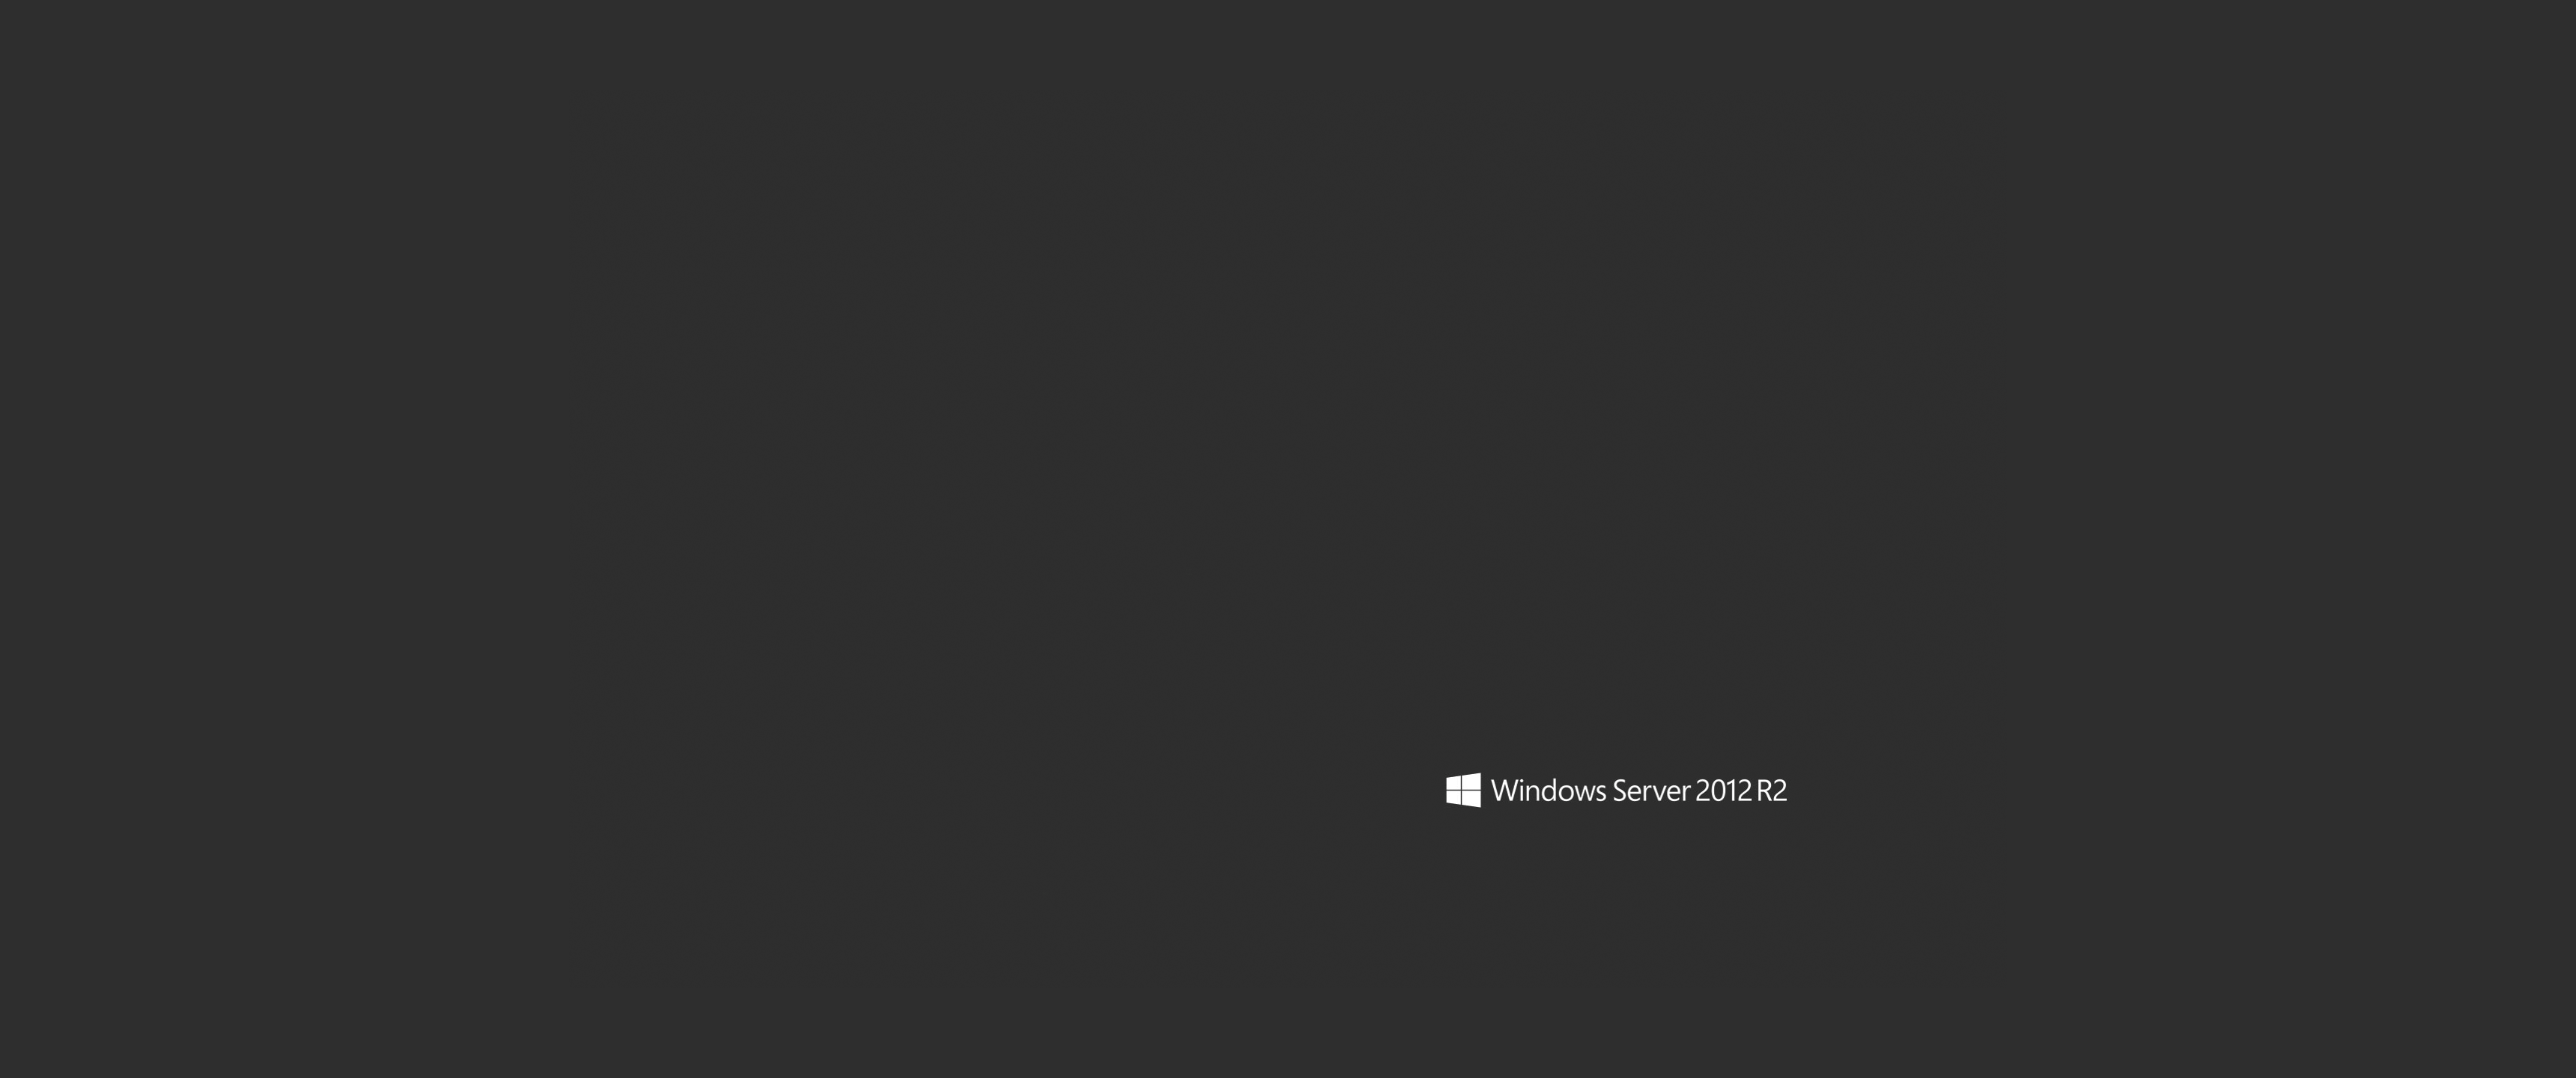 windows server 2012 r2 wallpaper,black,text,brown,font,sky